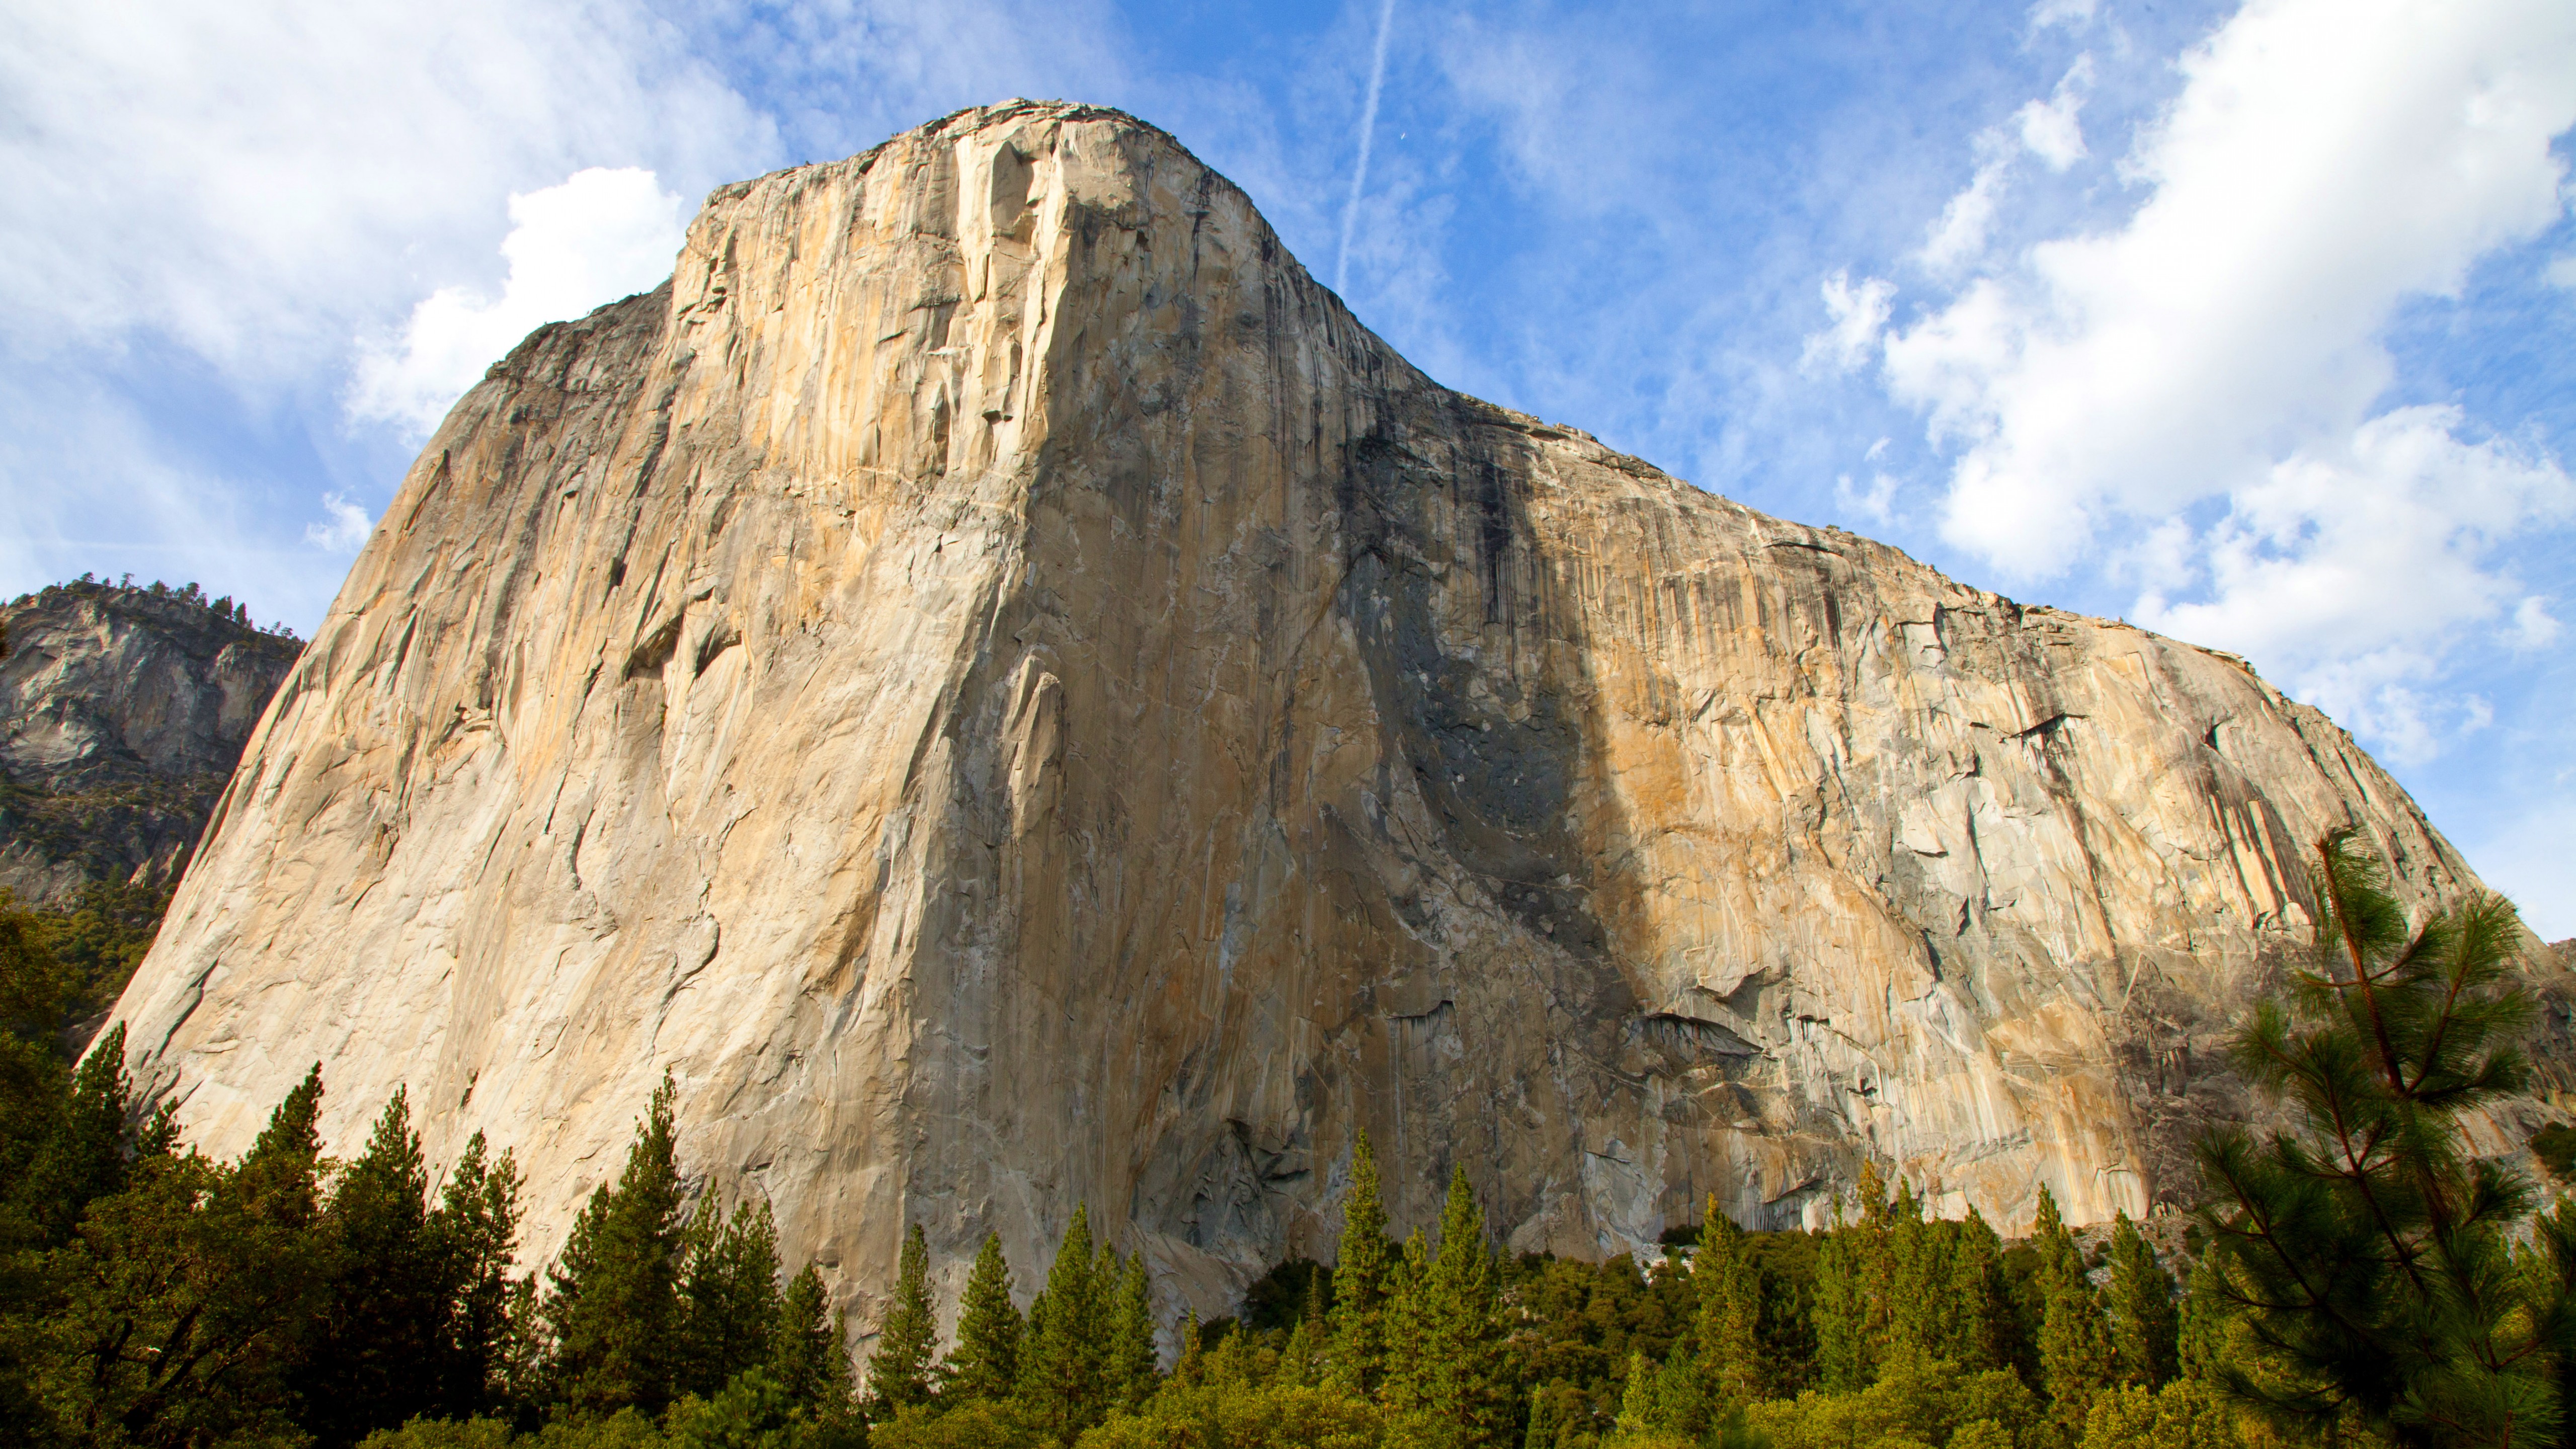 Download Photos For Mac Yosemite